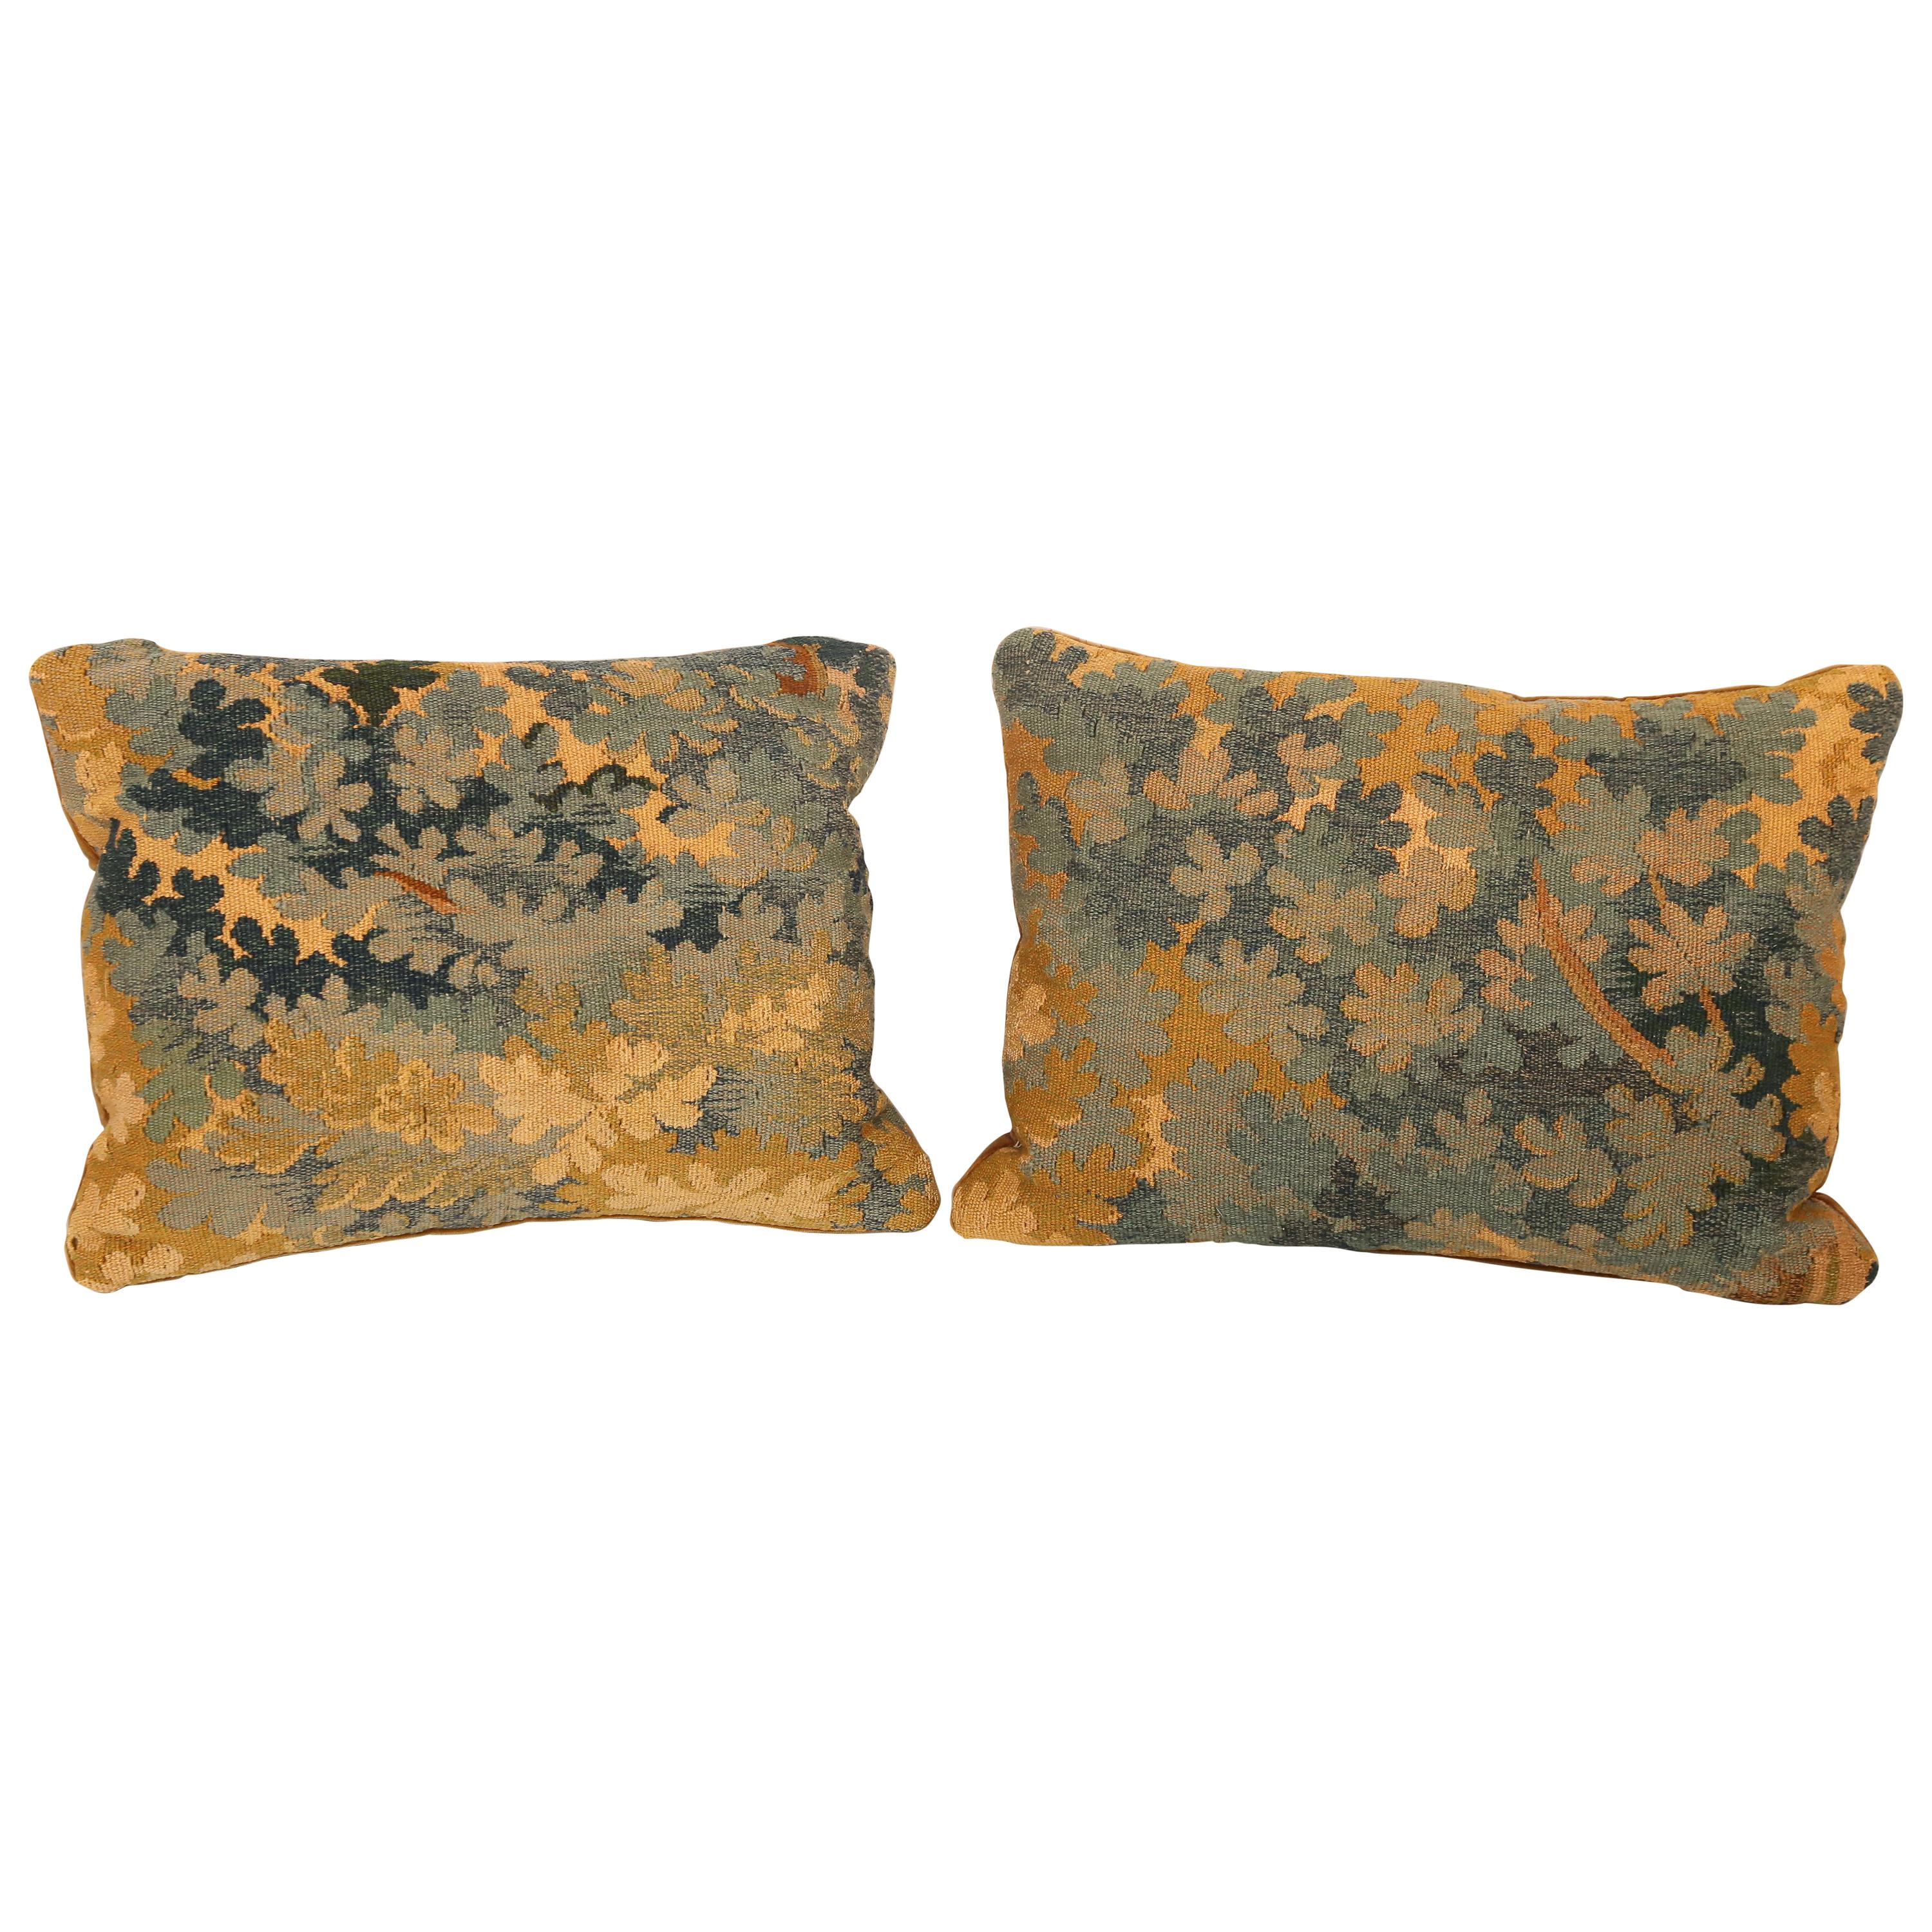 Pair of 18th Century Aubusson Pillows